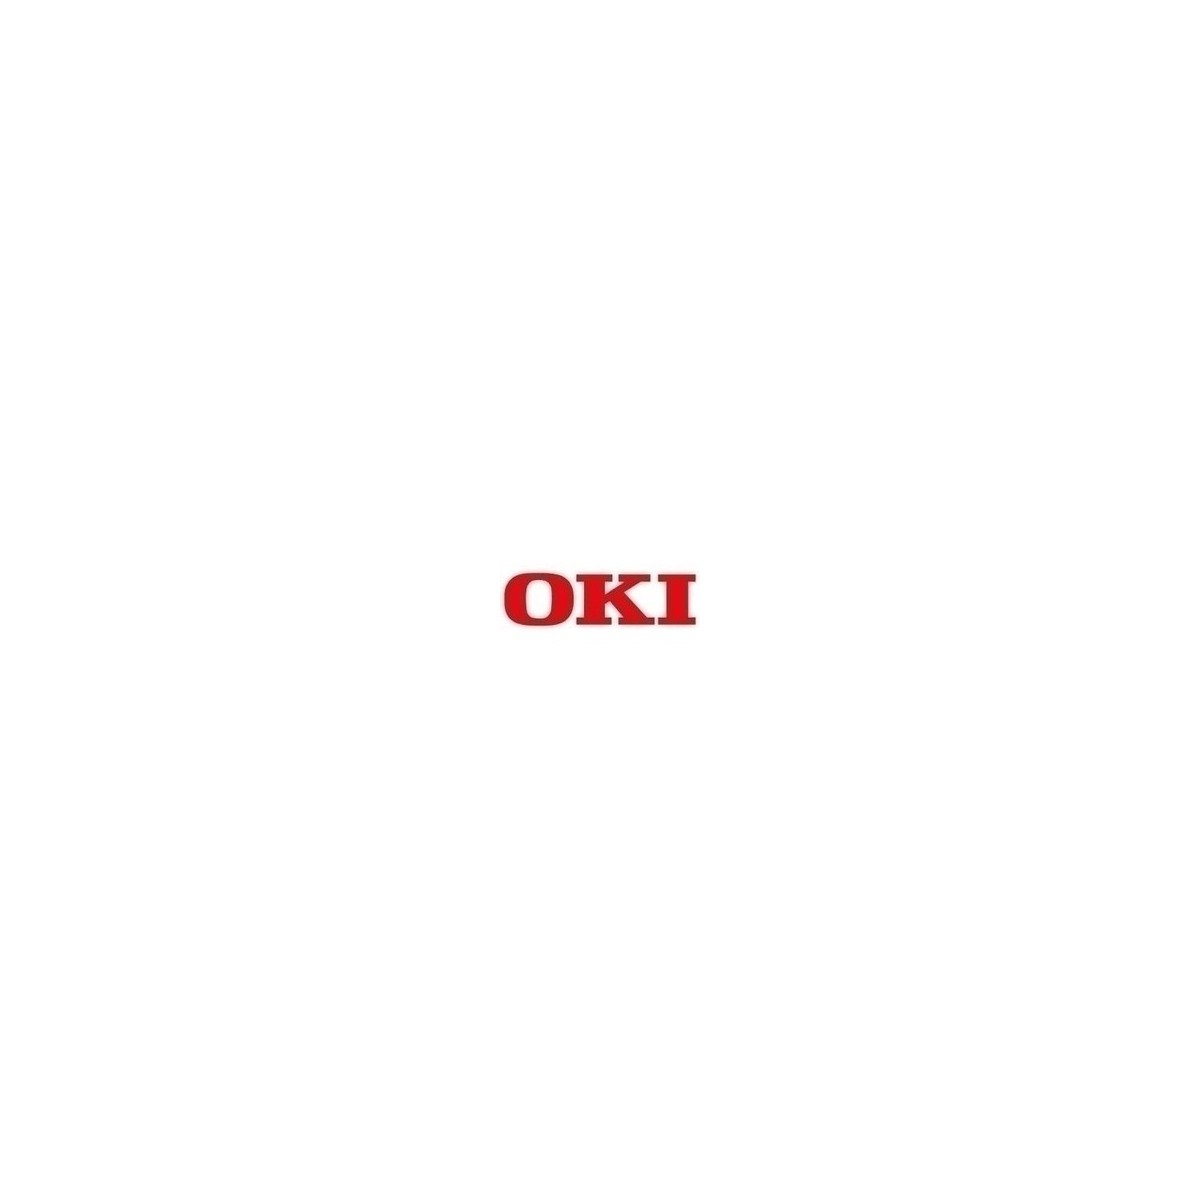 OKI Toner ES3640 Yellow - 15000 pages - Yellow